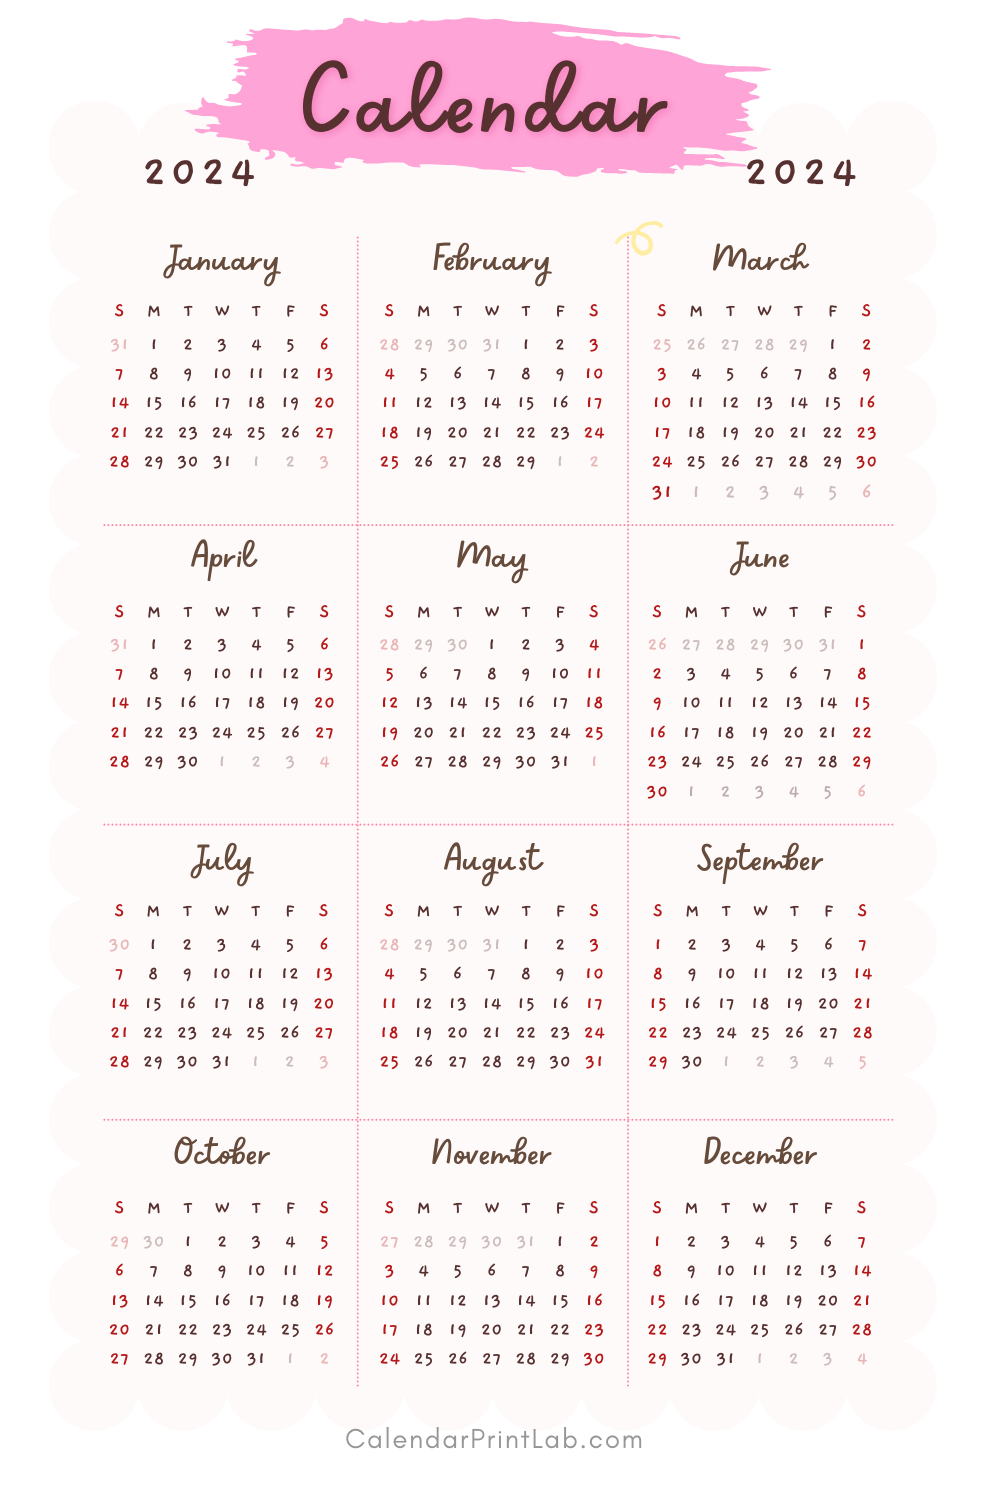 Calendar 2024 Wallpapers in HD Download by Calendar Print Lab Medium